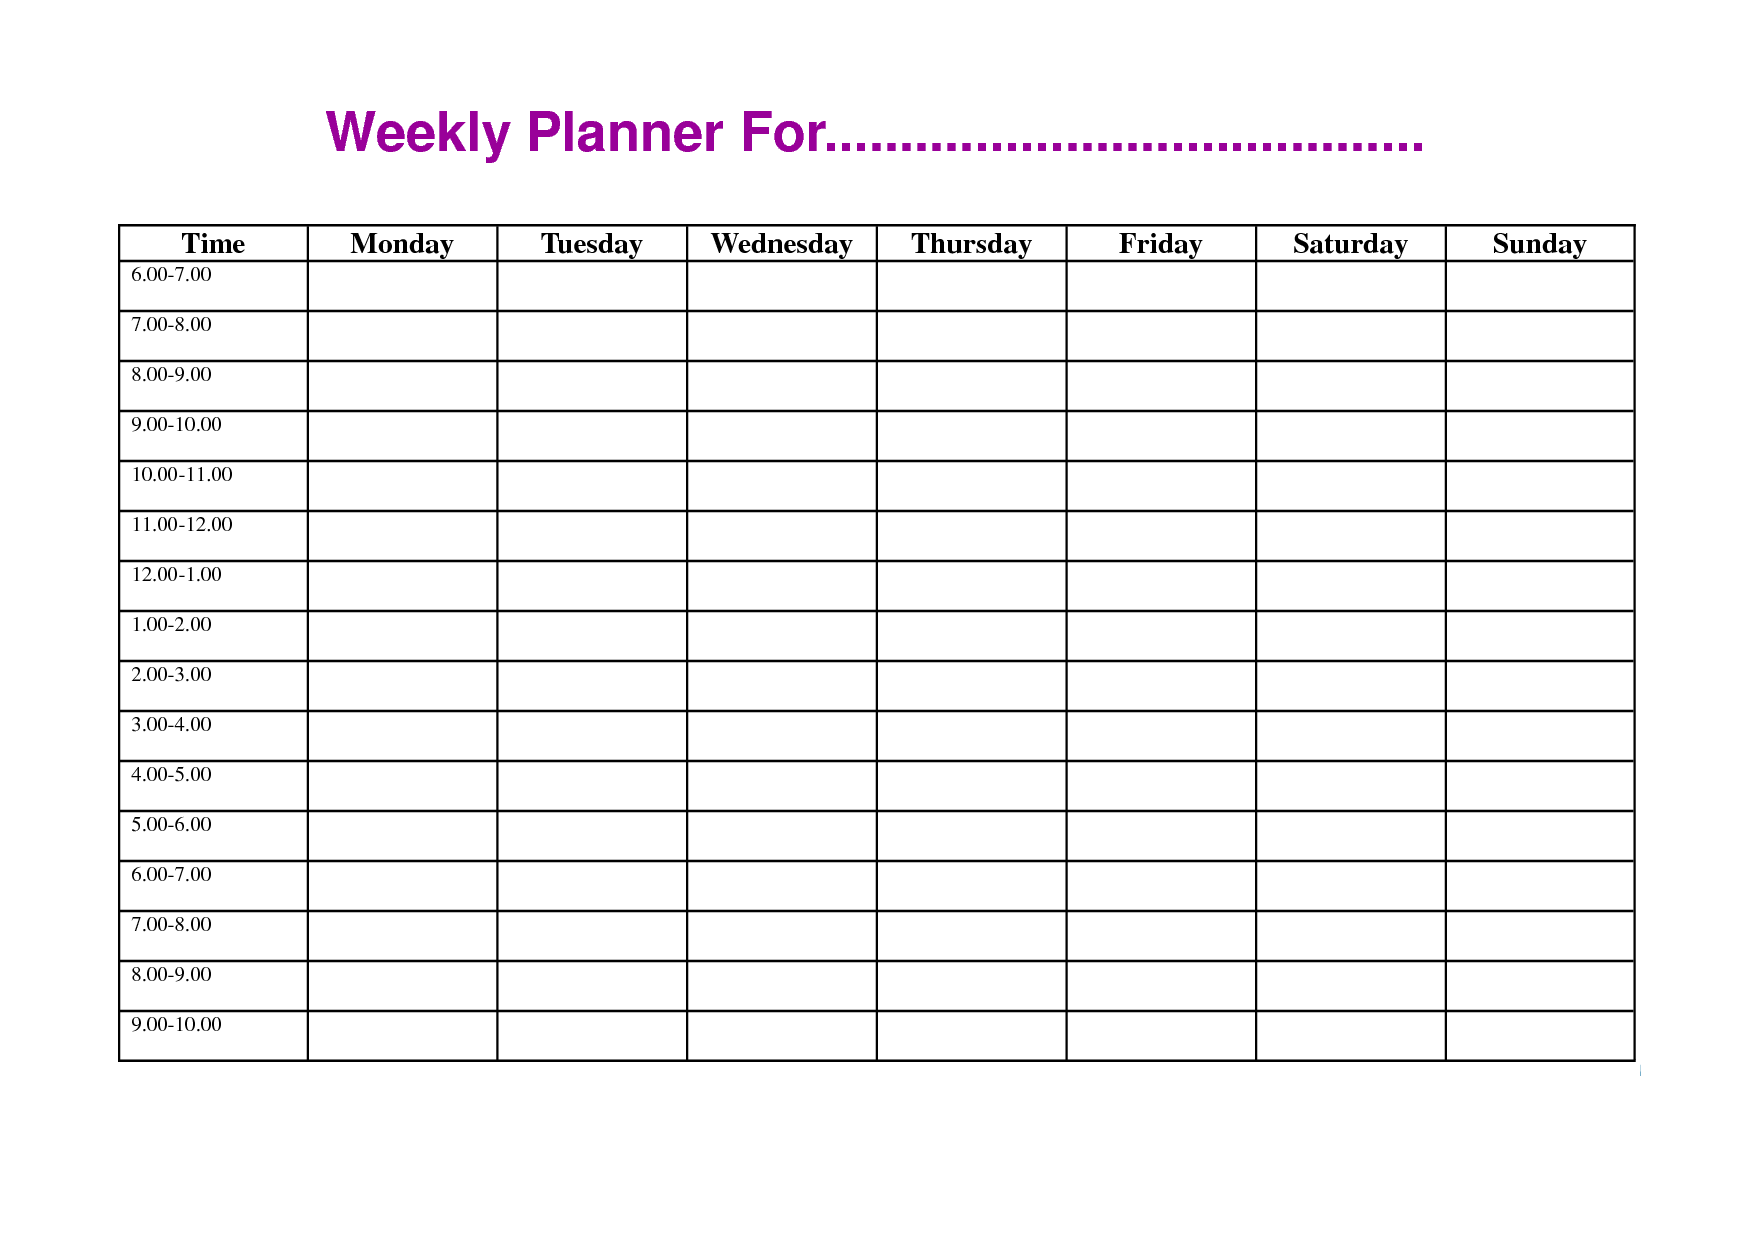 Weekly Schedule Template Jotform Tables - vrogue.co